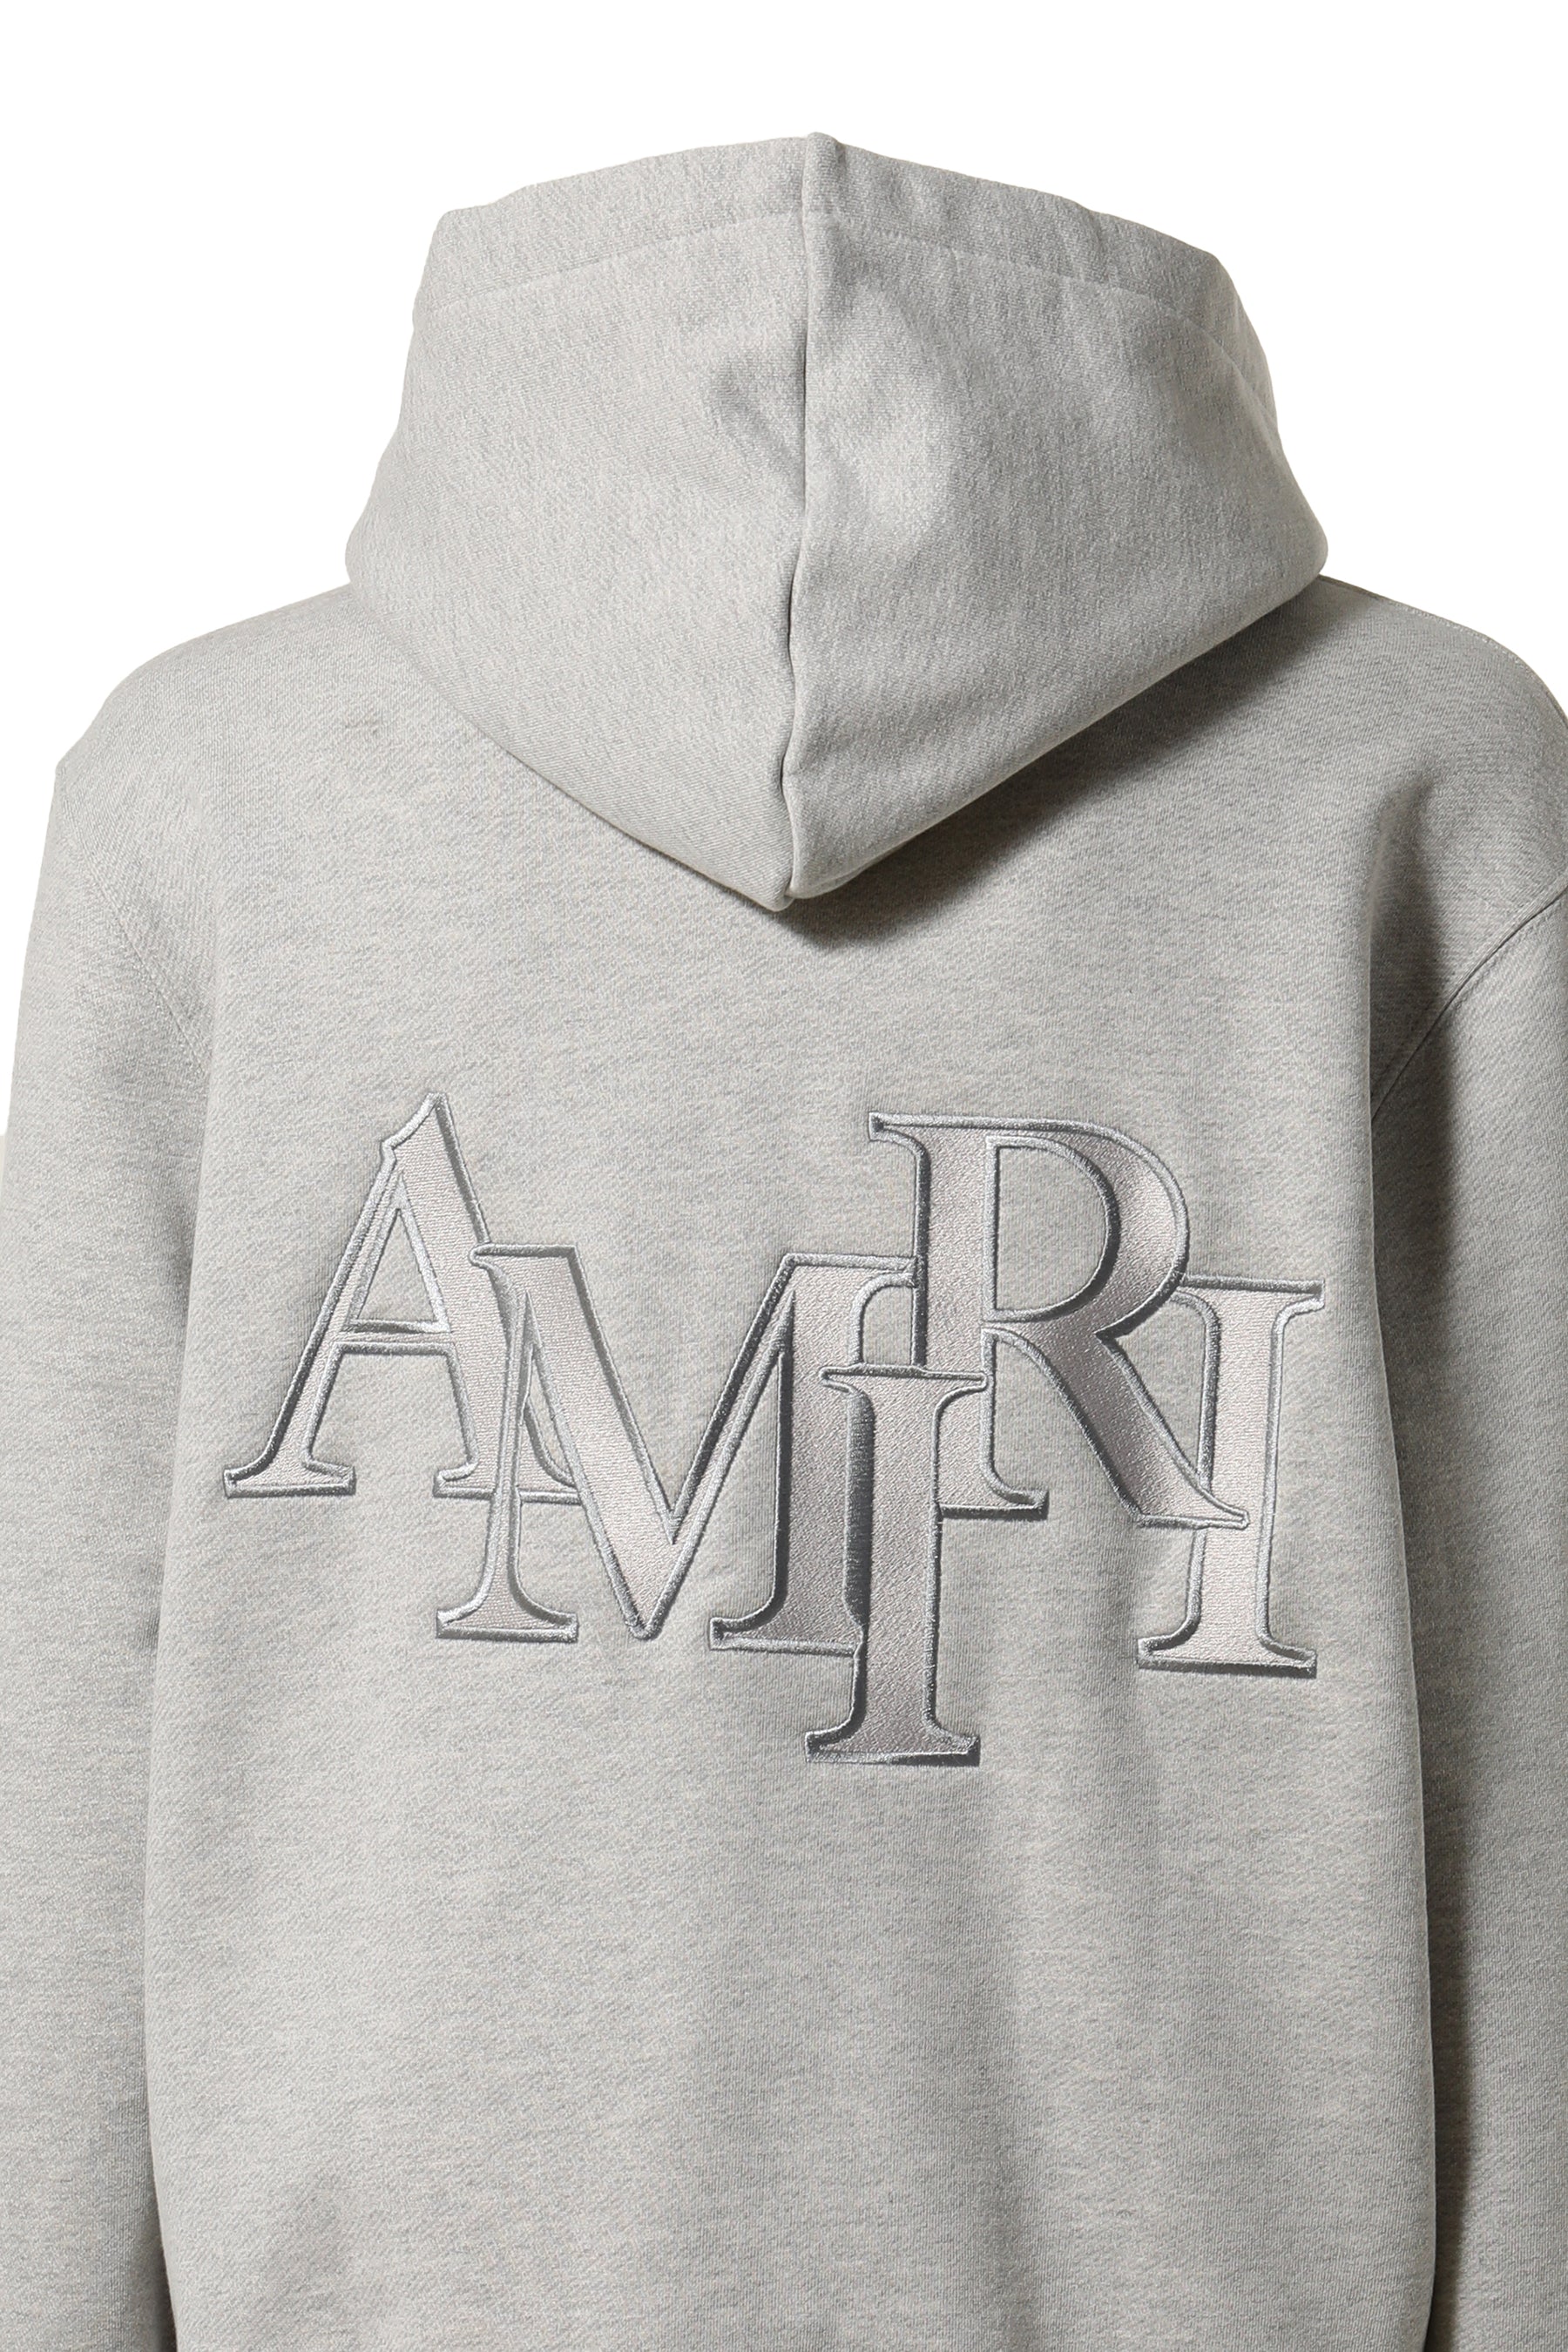 Armani Exchange Men's Cotton Jacquard Fleece Hooded Sweatshirt, D